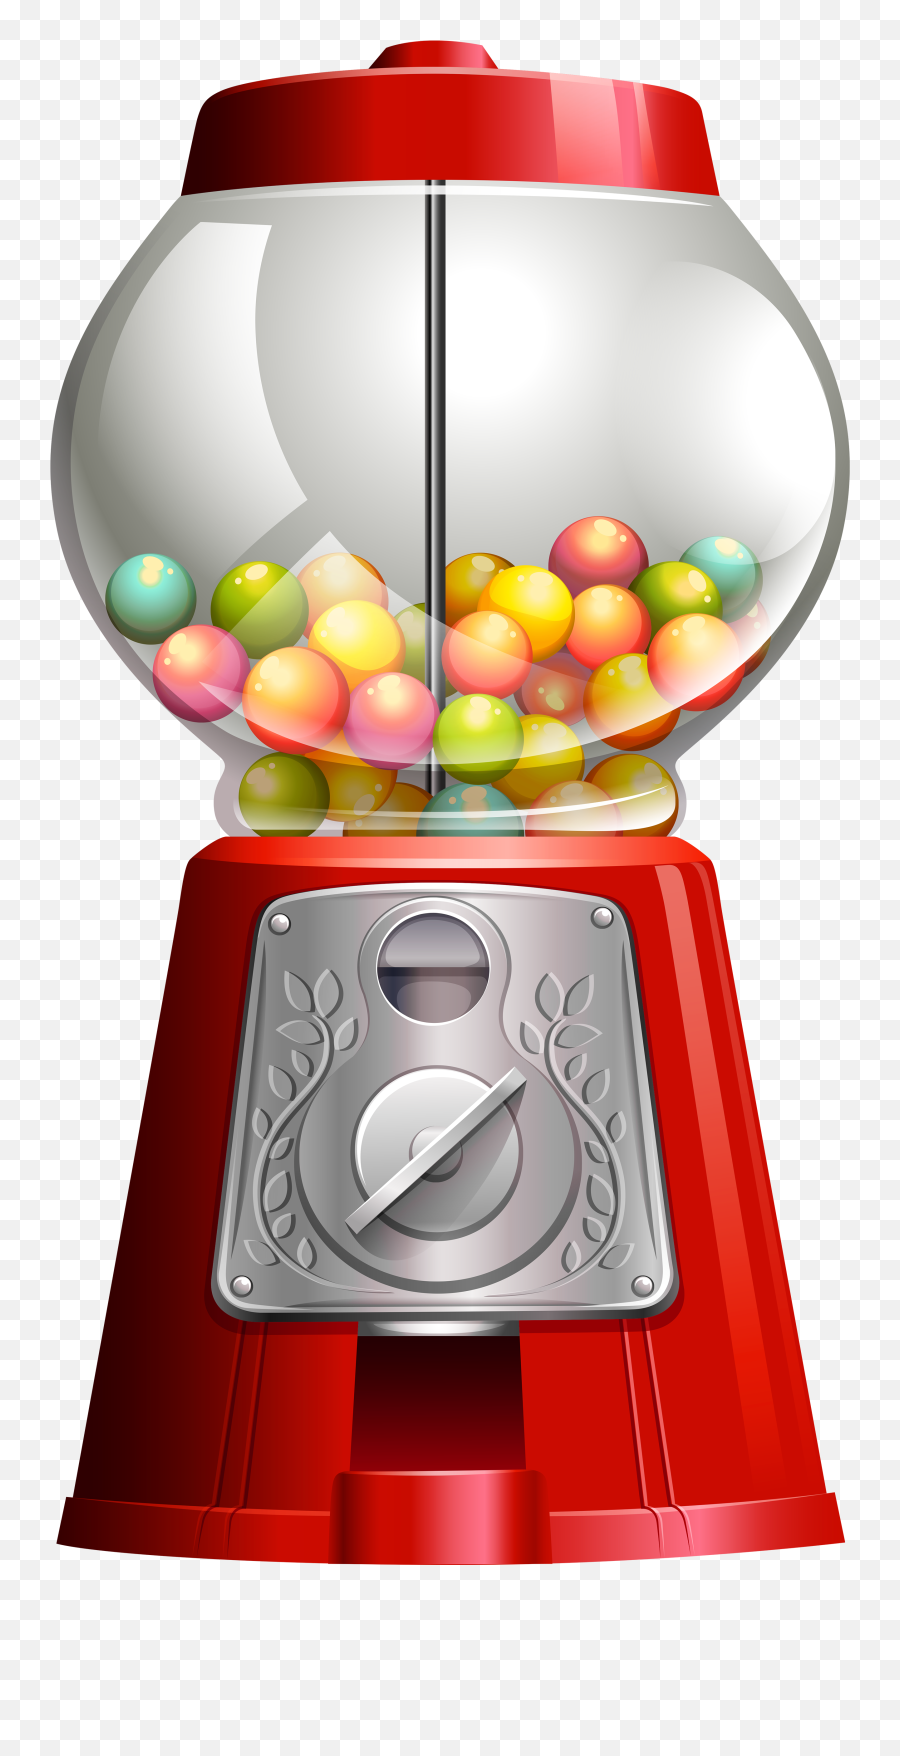 Candy Emoji - Candy Machine Vector,Candy Emoji